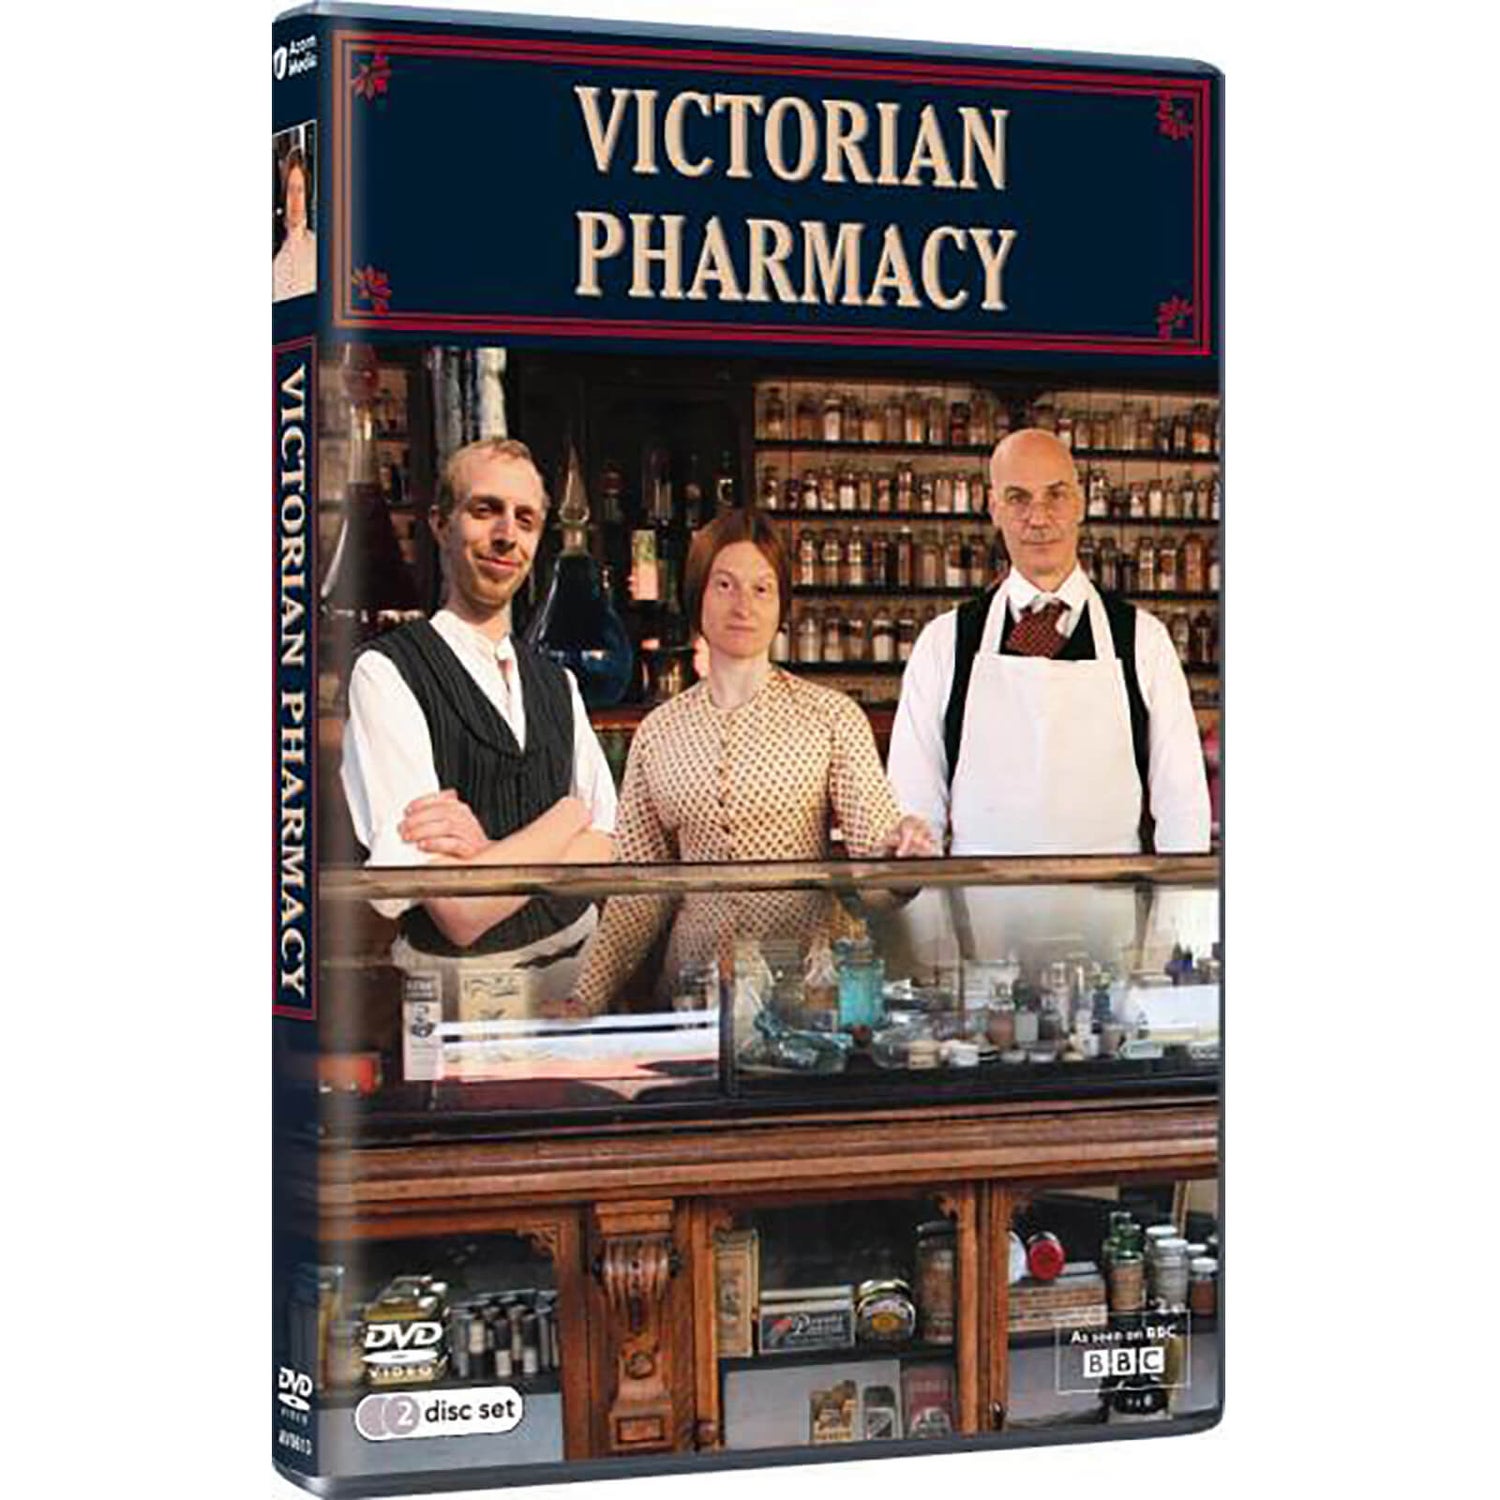 The Victorian Pharmacy